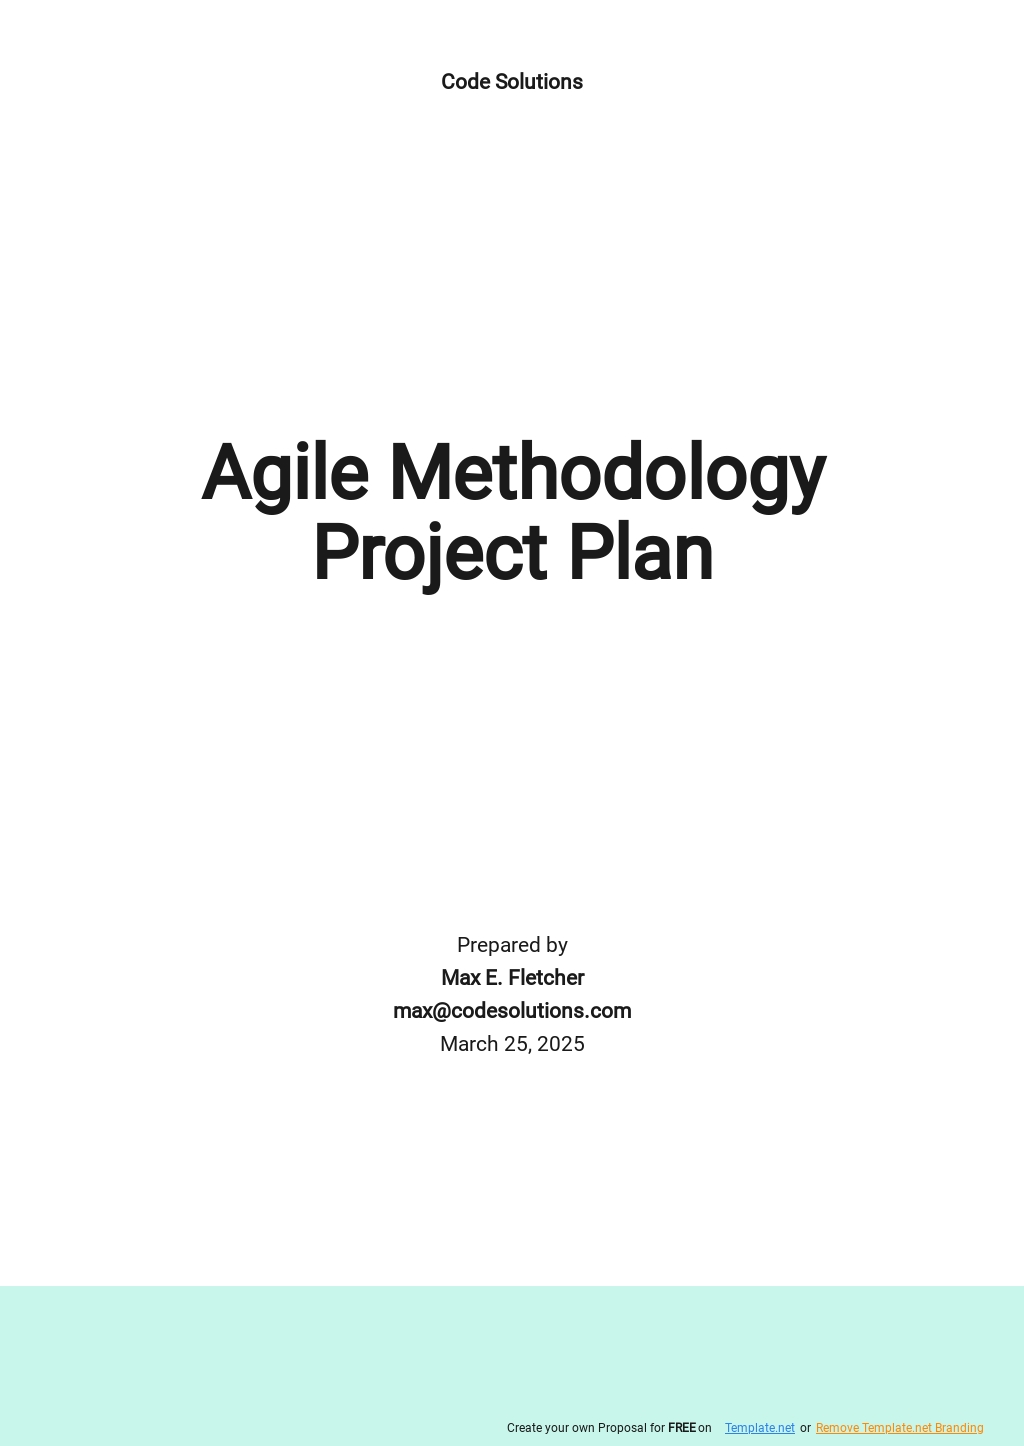 Agile Methodology Project Plan Template.jpe